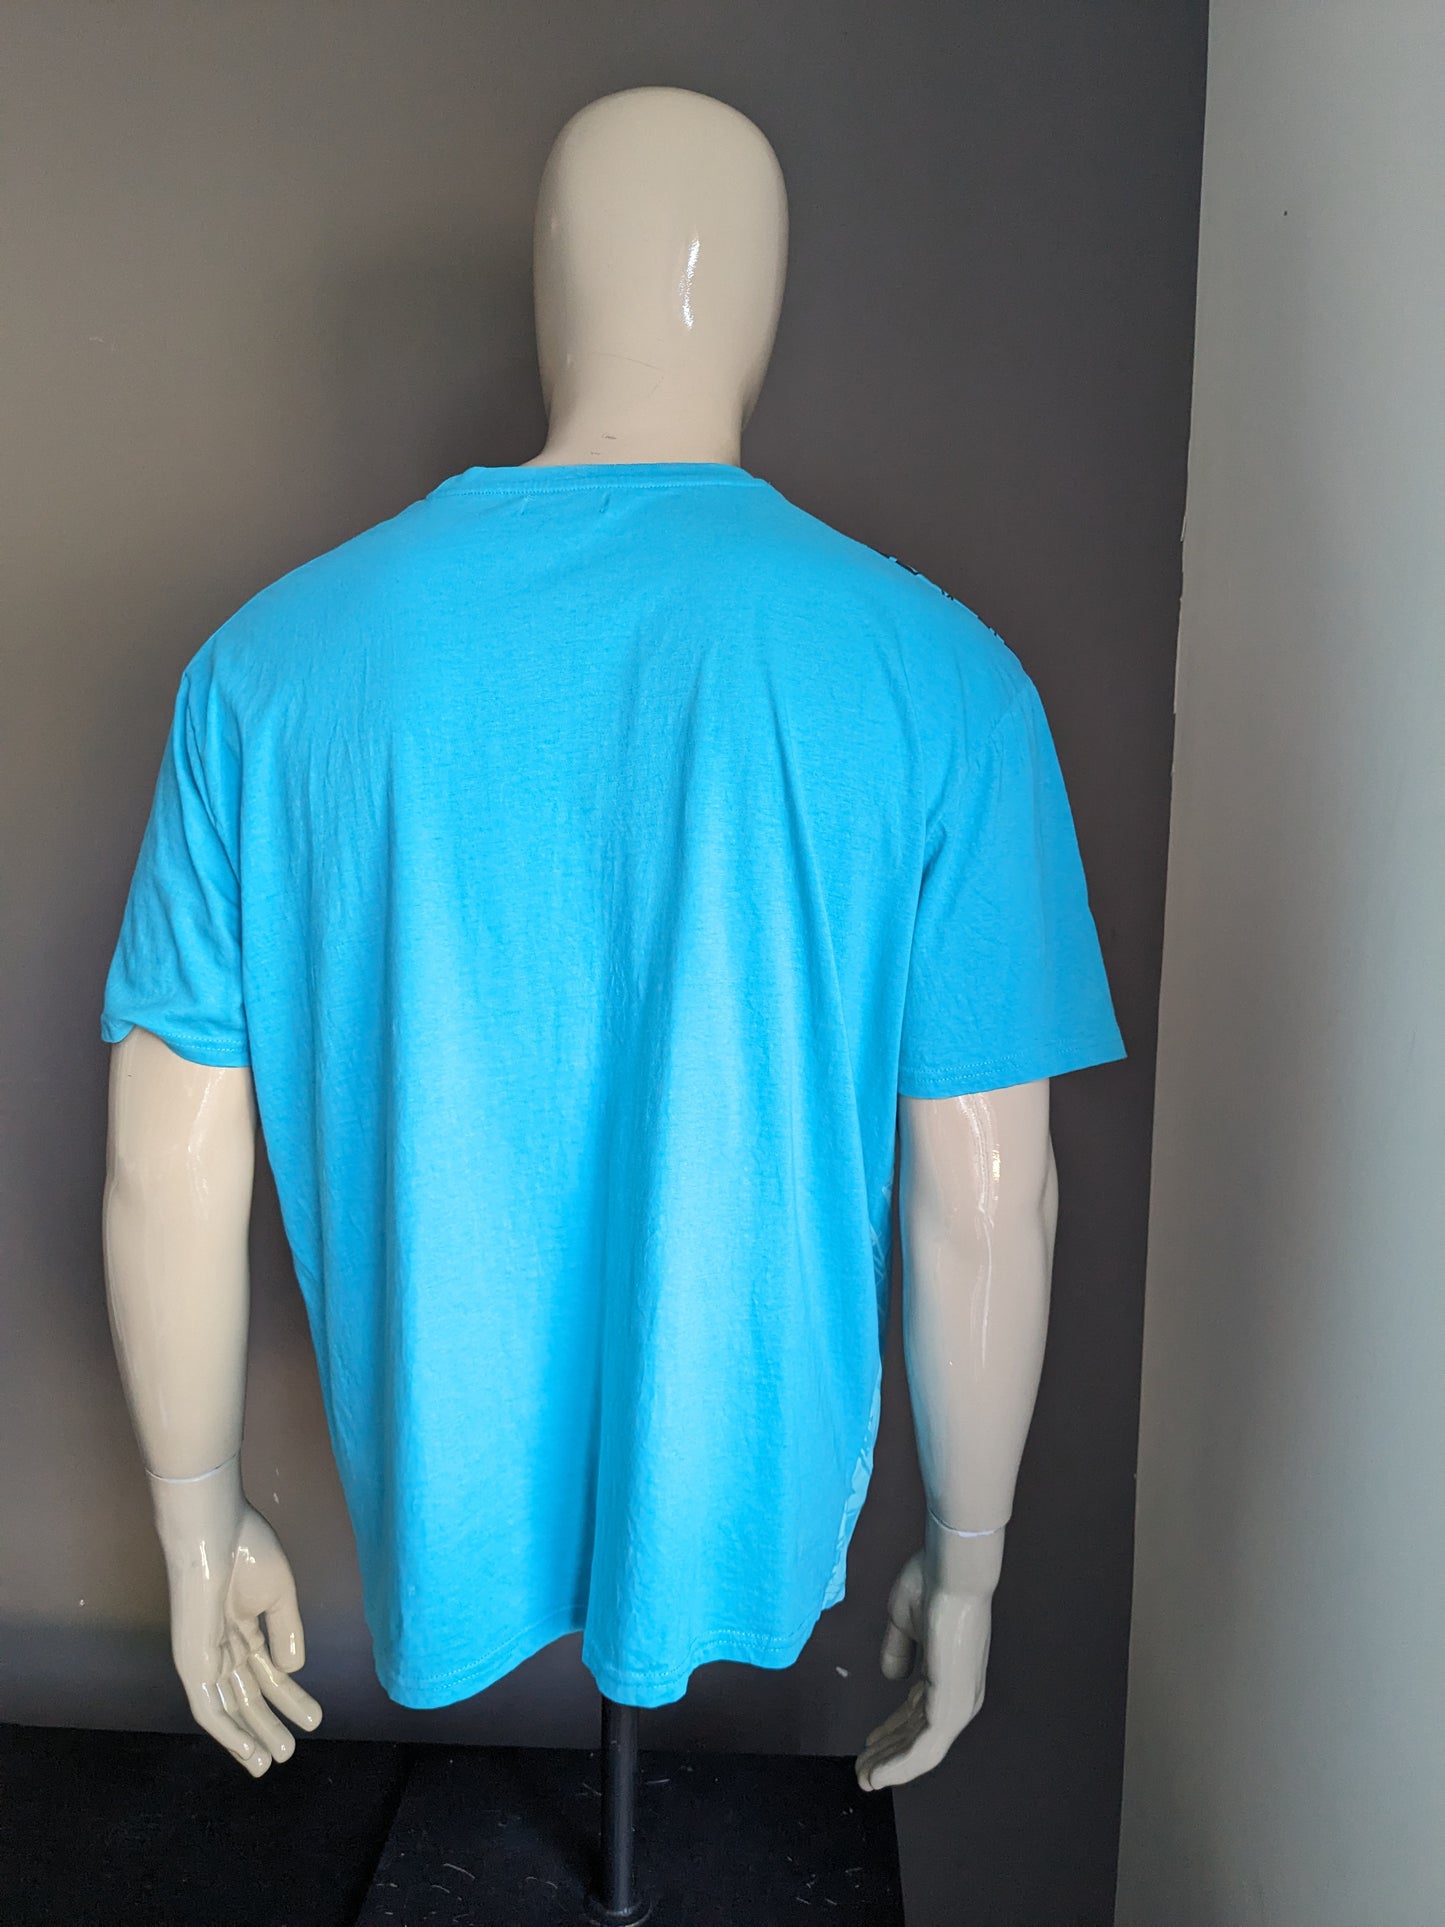 Atlas for men shirt. Blue with print. Size 3XL / XXXL.